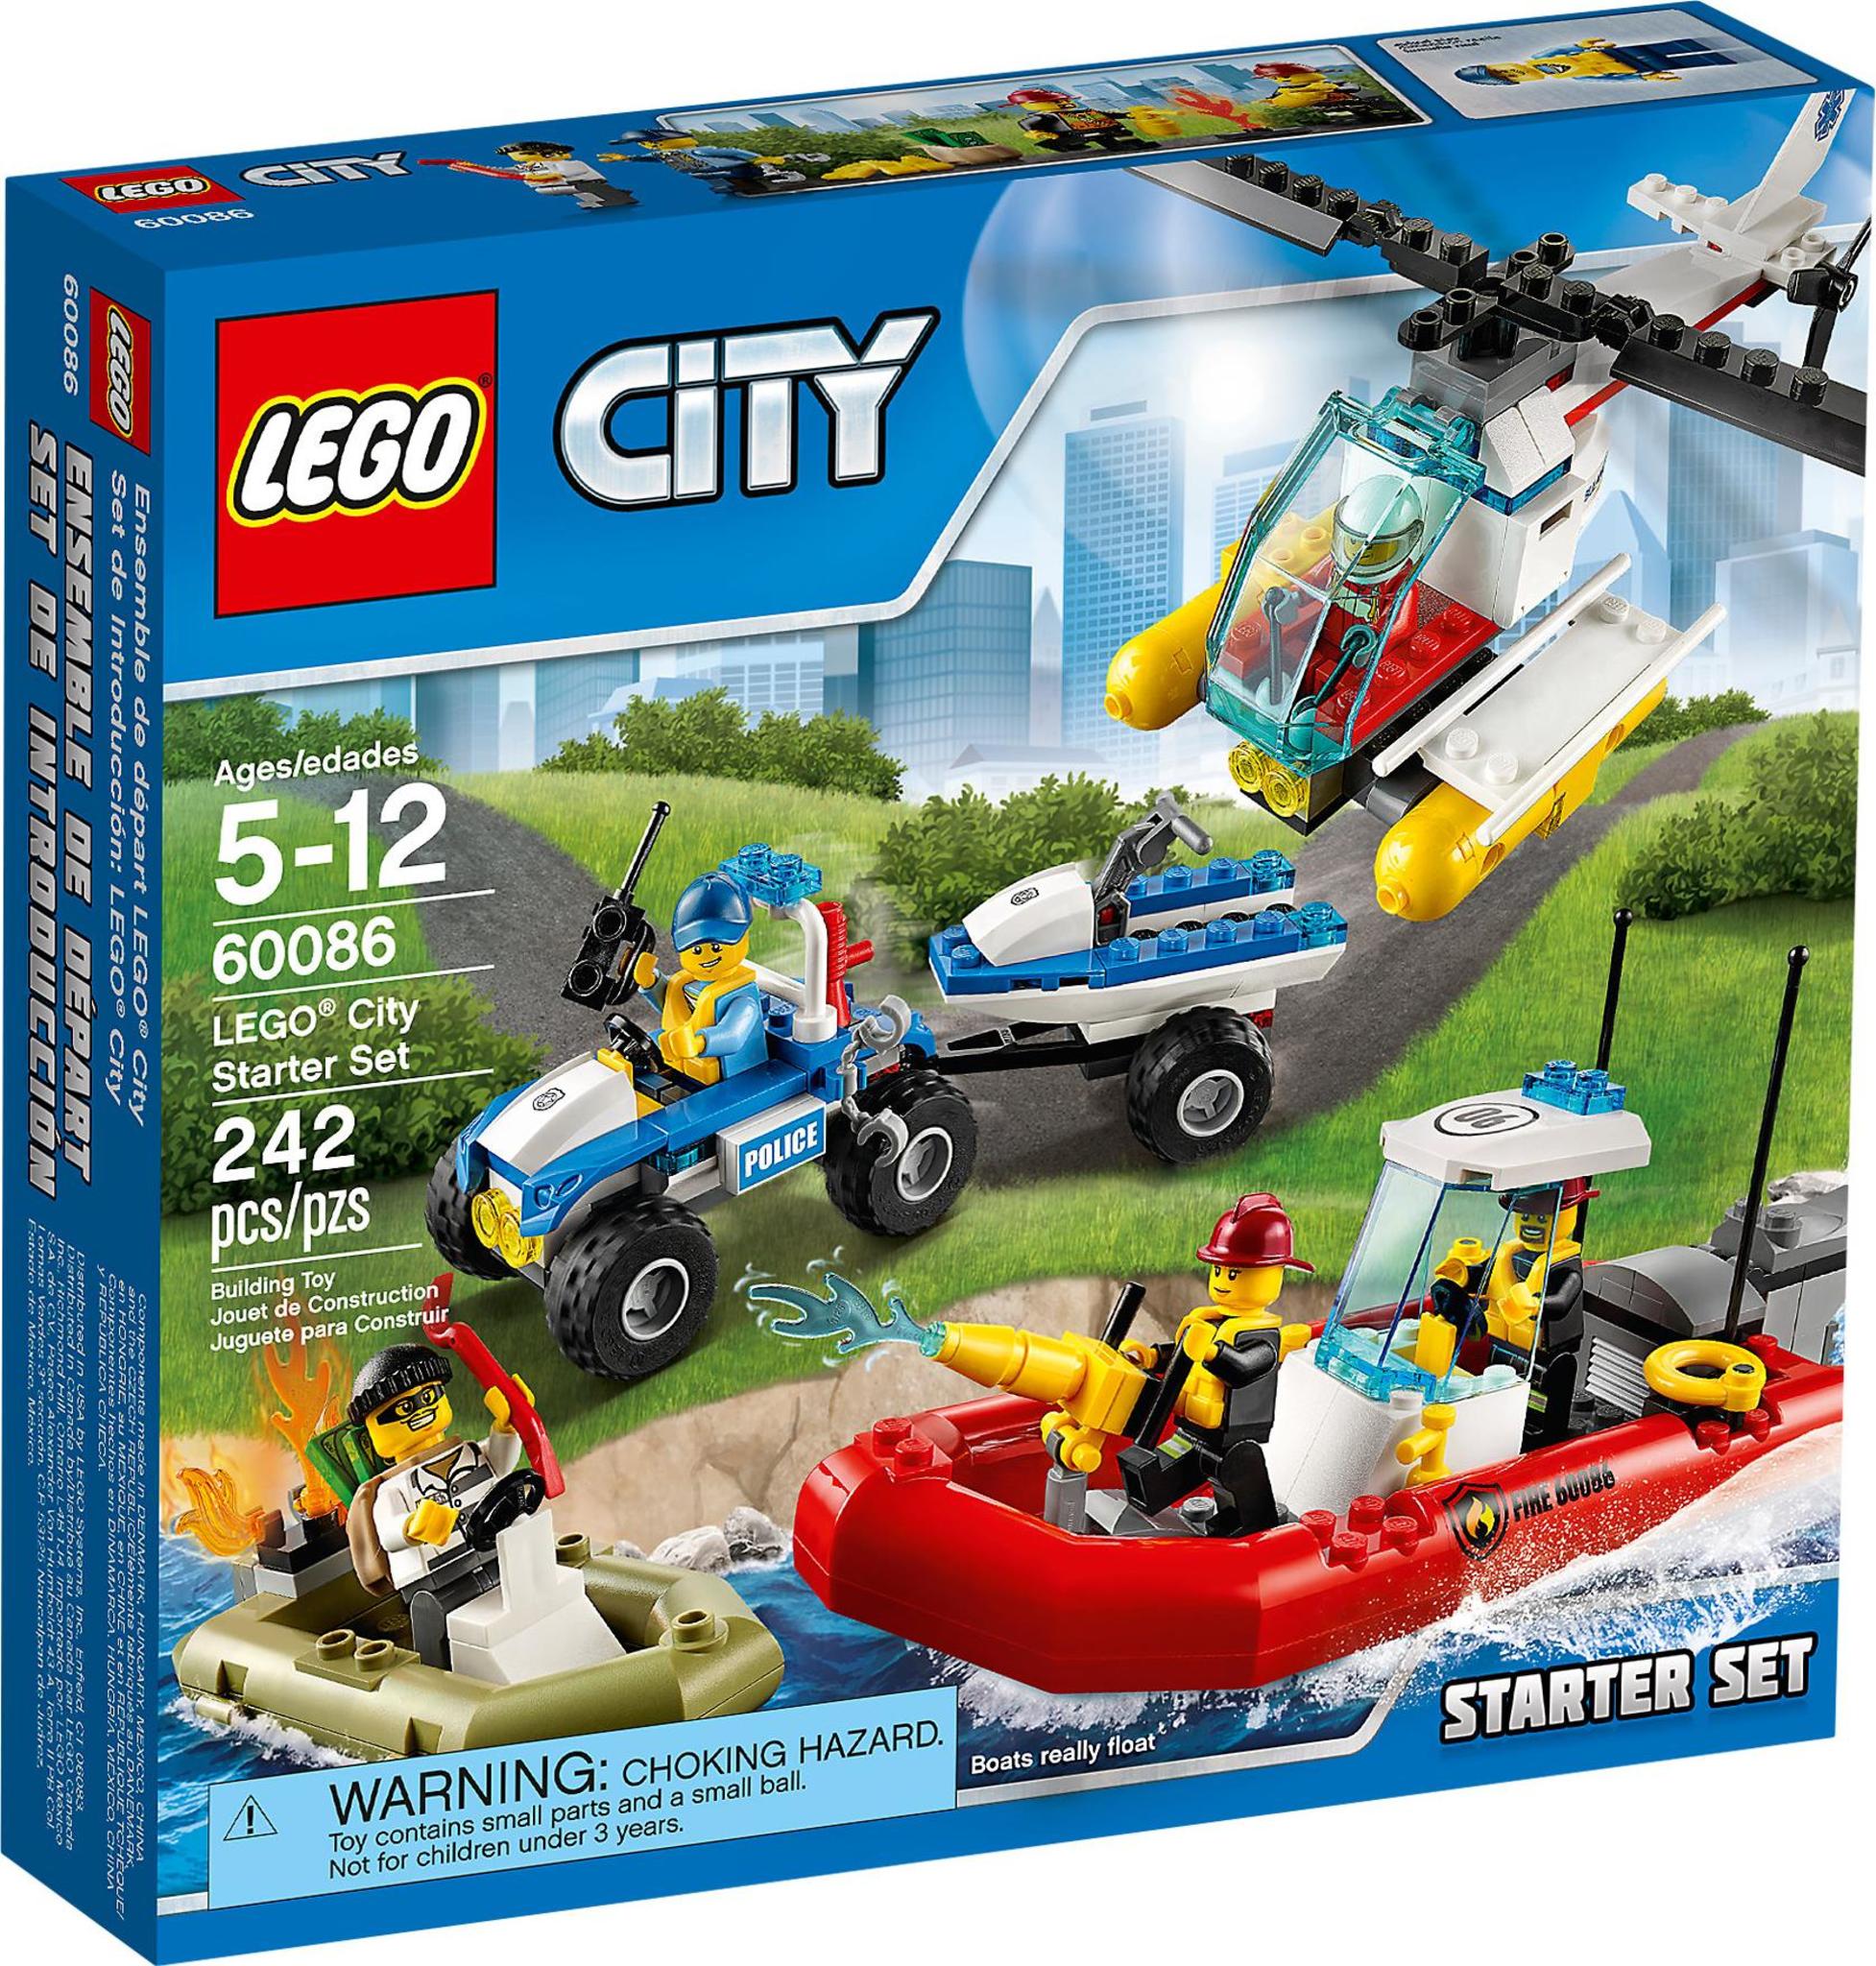 LEGO City 60086 - LEGO City Starter Set